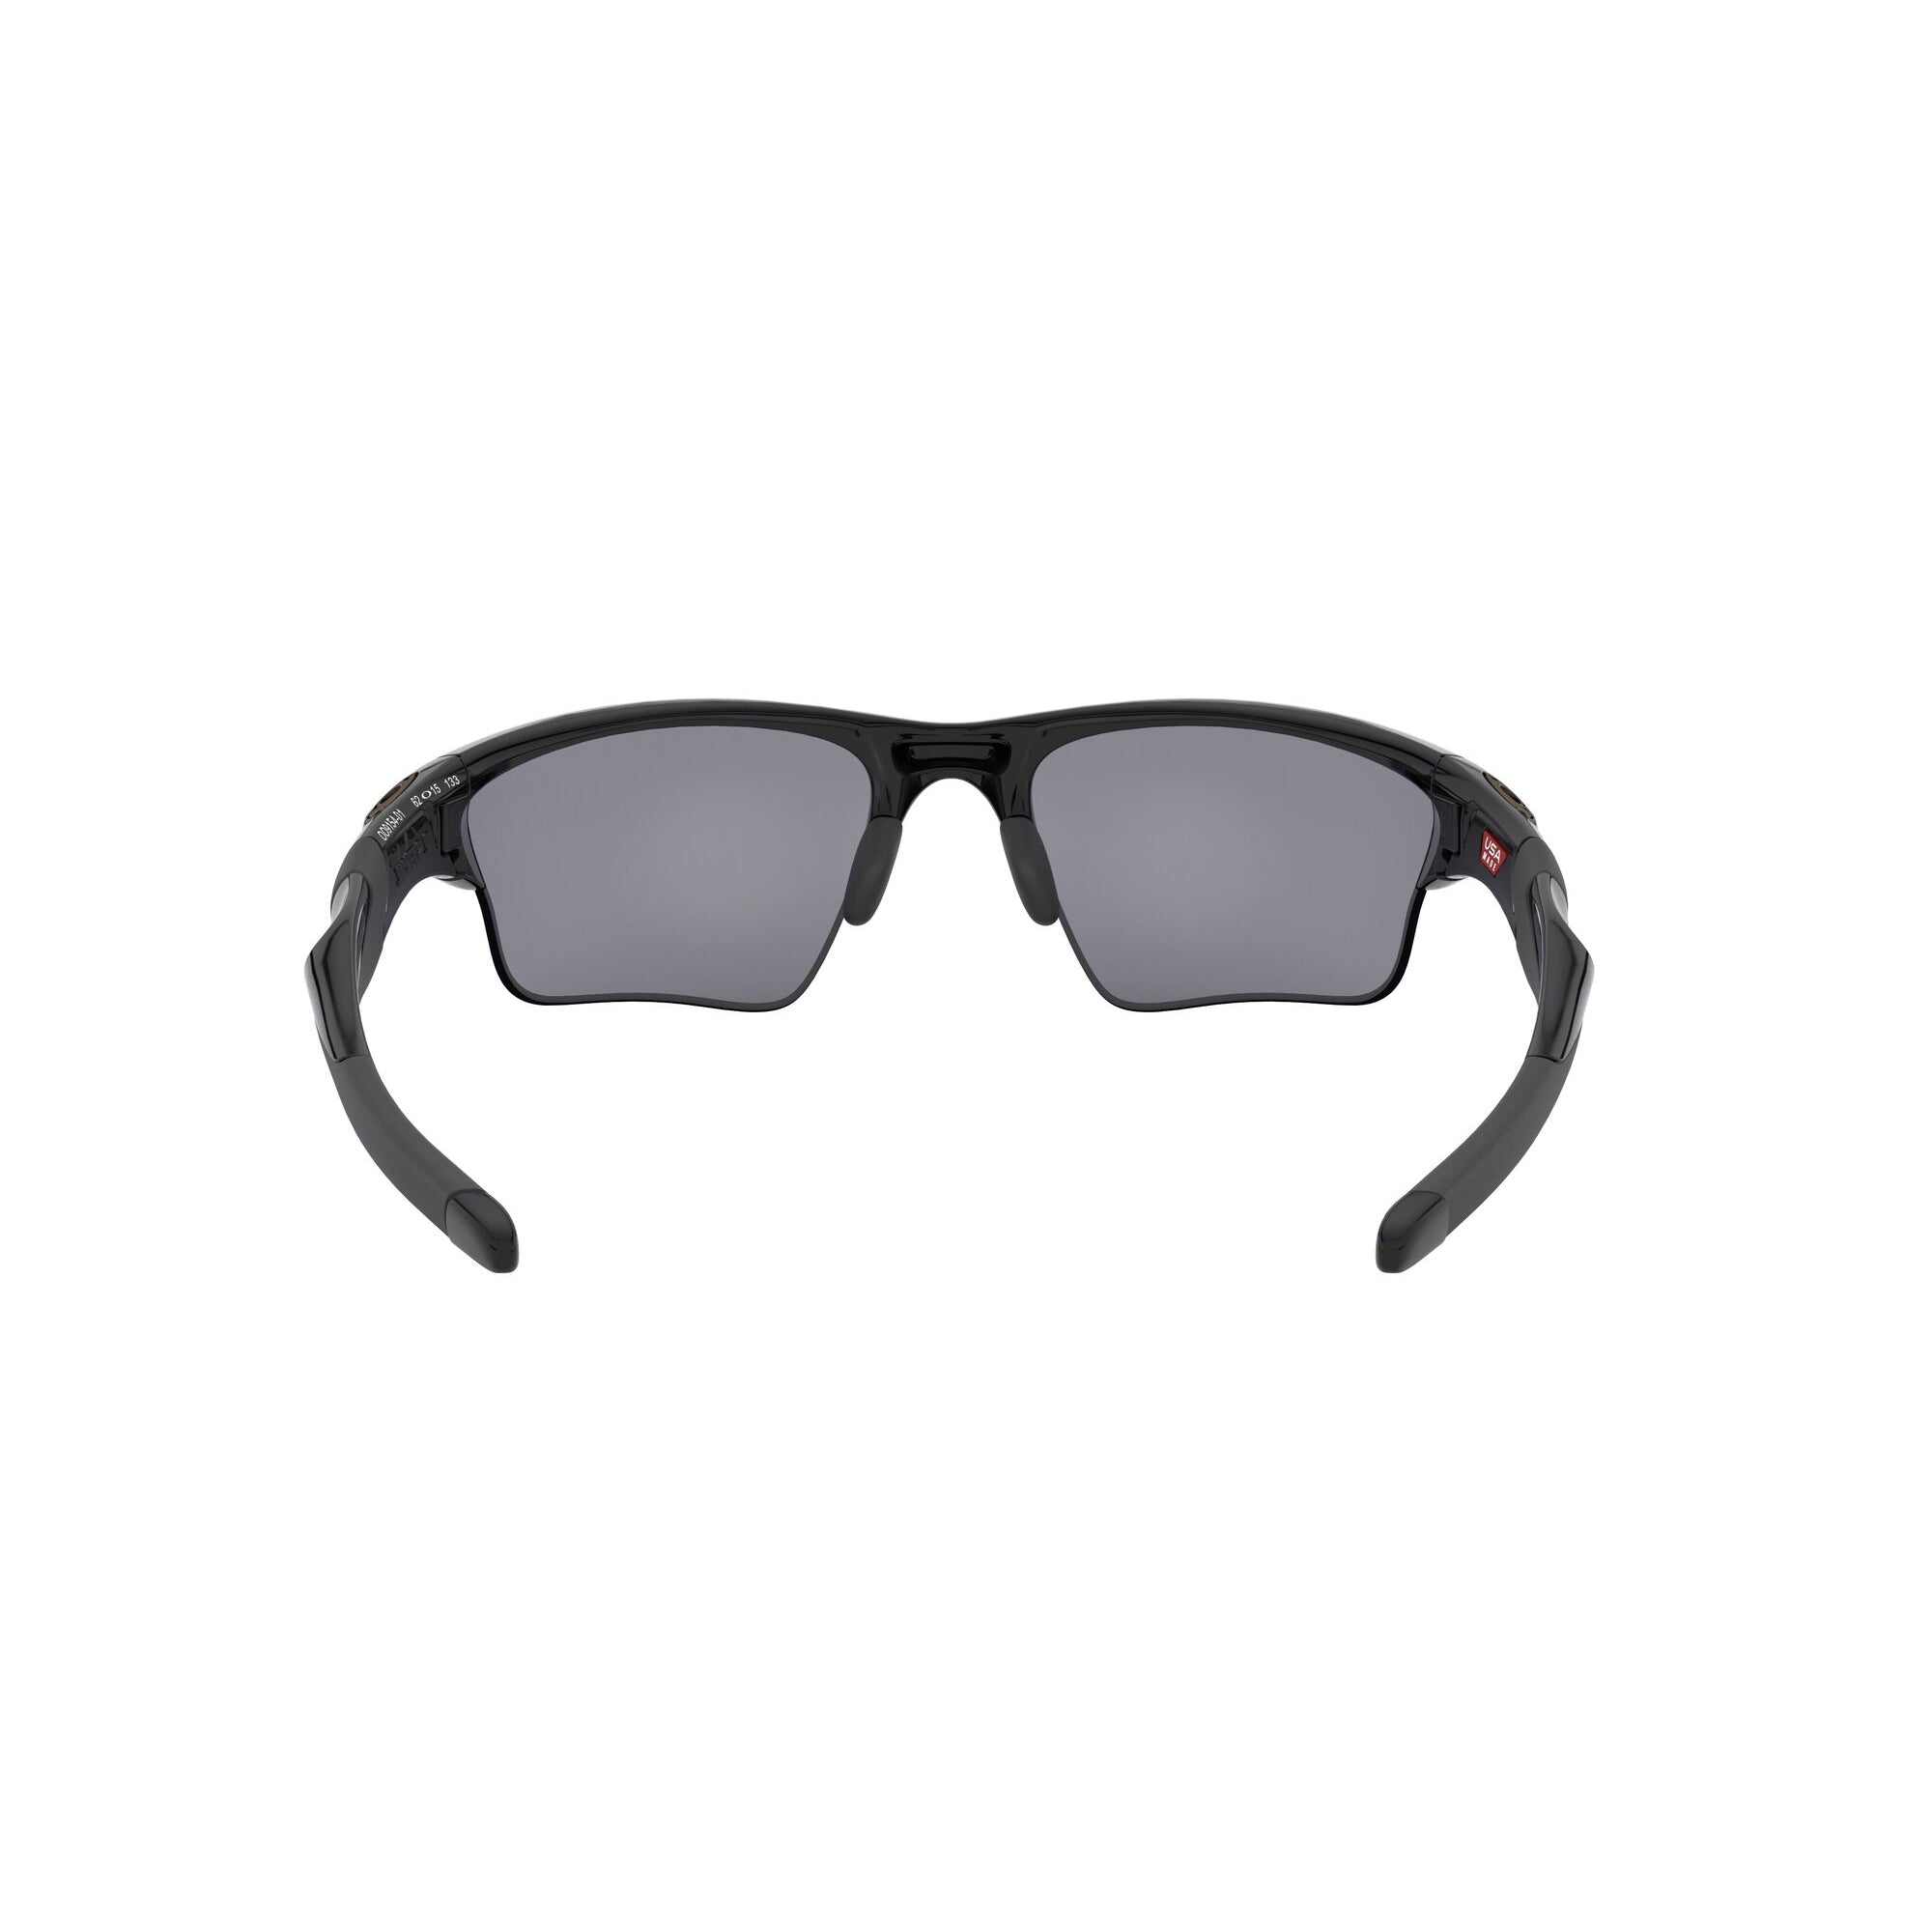 Oakley OO9154-01 Half Jacket 2.0 XL Sunglasses Polished Black Frame Black IridiumLens